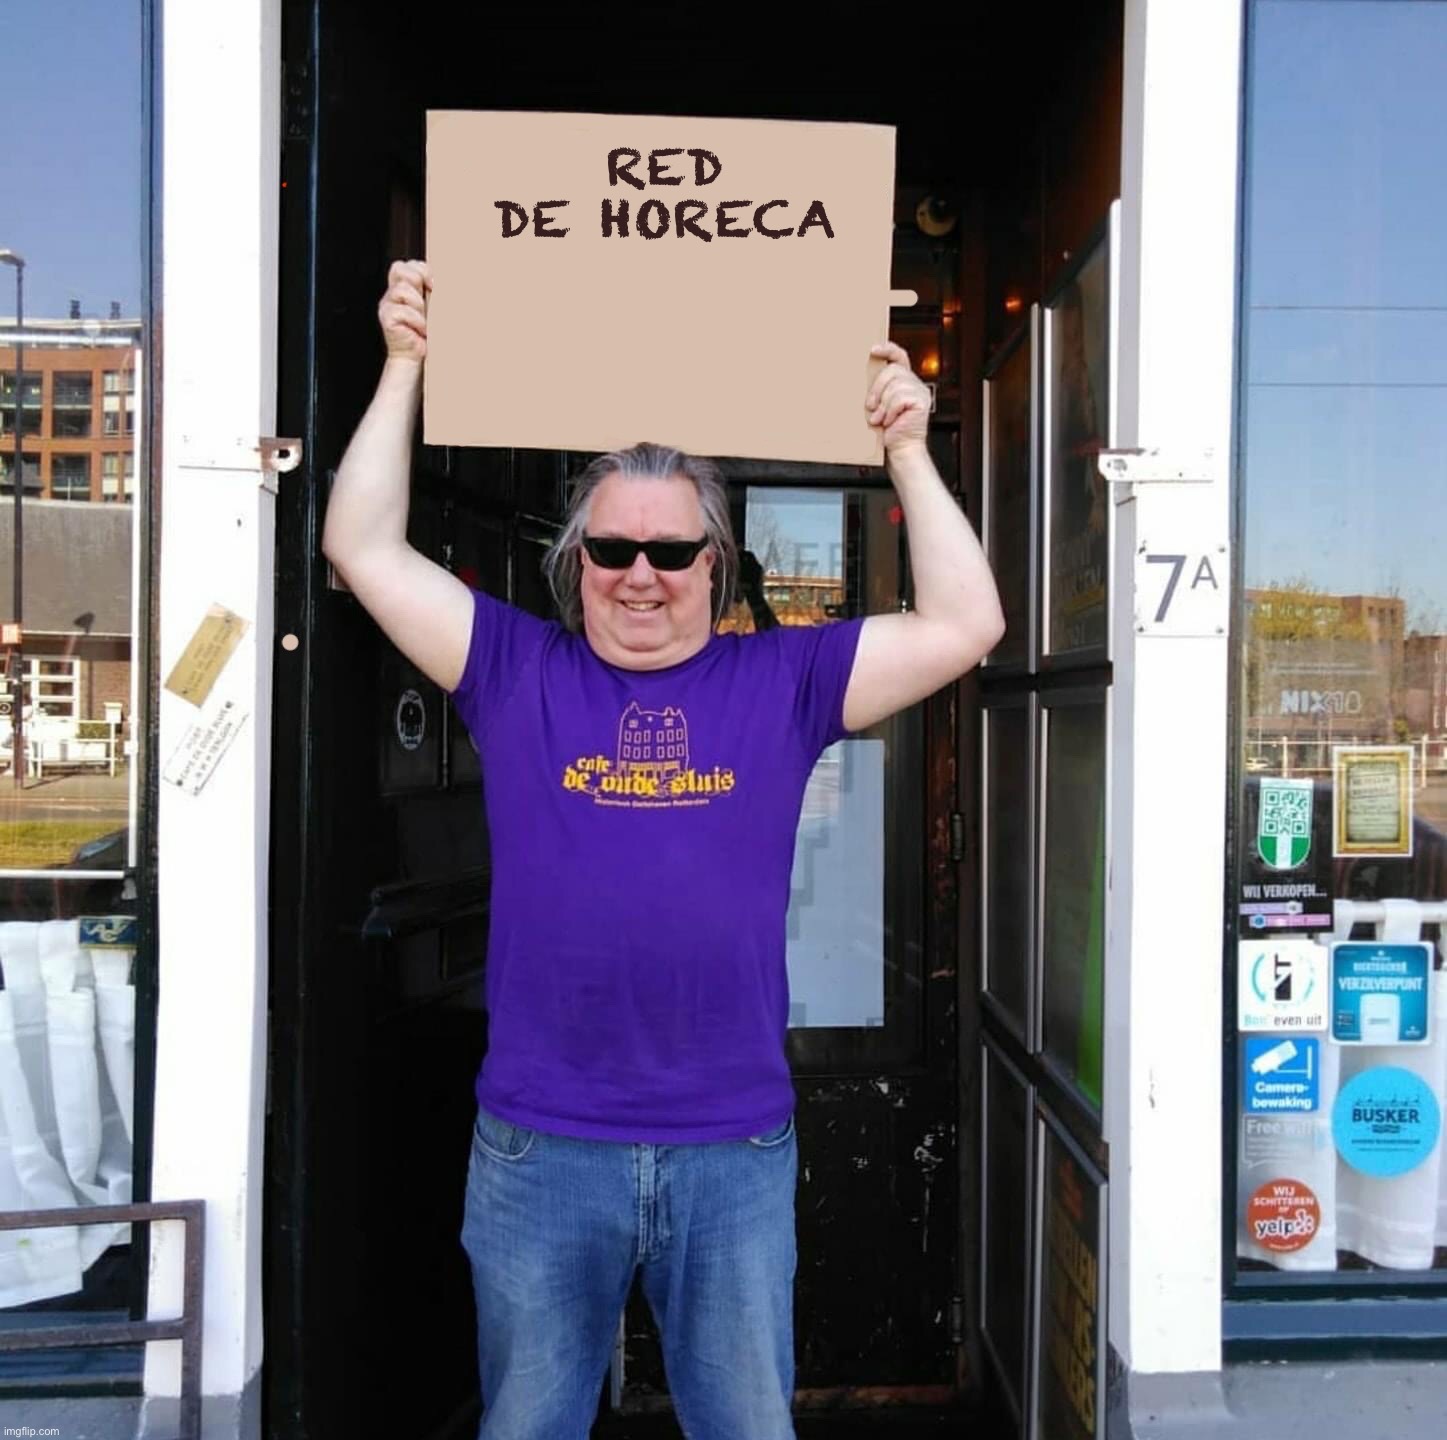 Red de horeca | RED DE HORECA | image tagged in first world problems,beer,bar,neighborhood | made w/ Imgflip meme maker